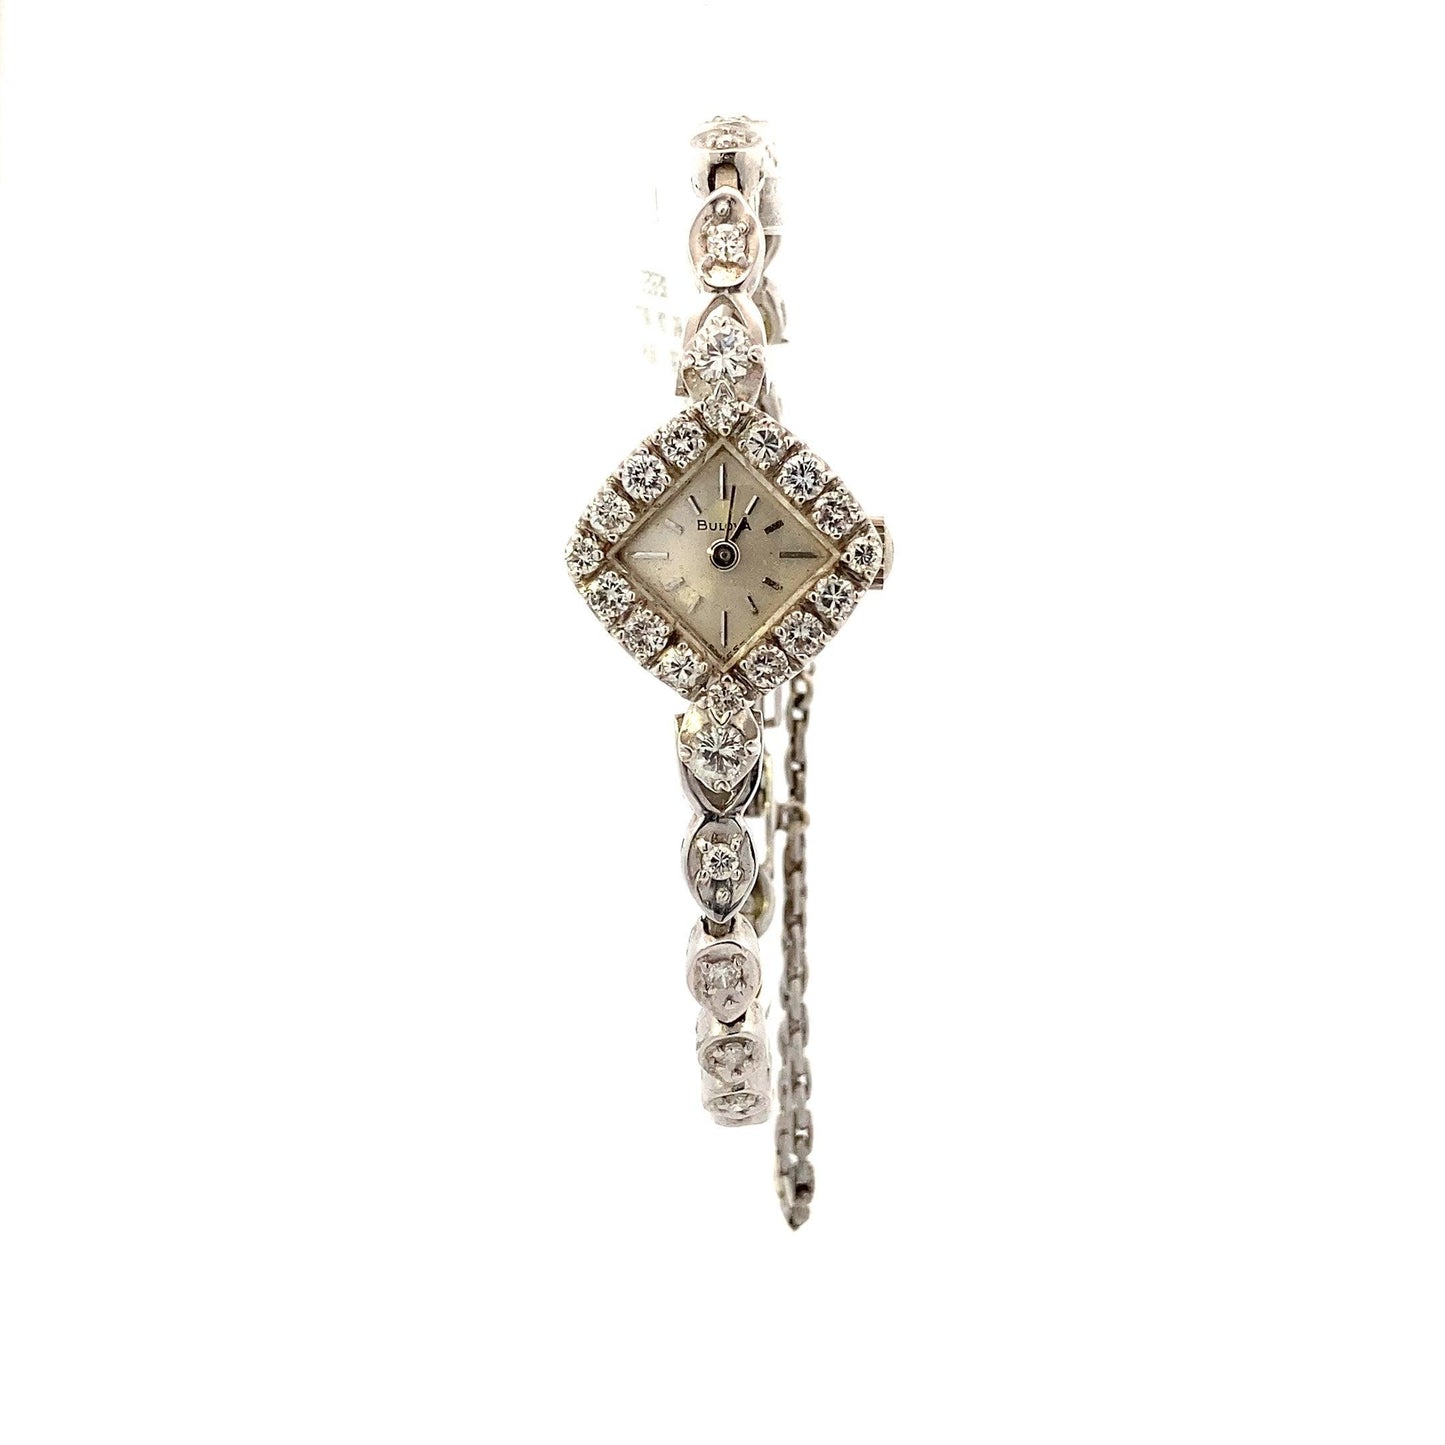 14K White Gold Bulova 17 Jewel Manual Wind Dress Women's Diamond Watch - 1.79ct - ipawnishop.com